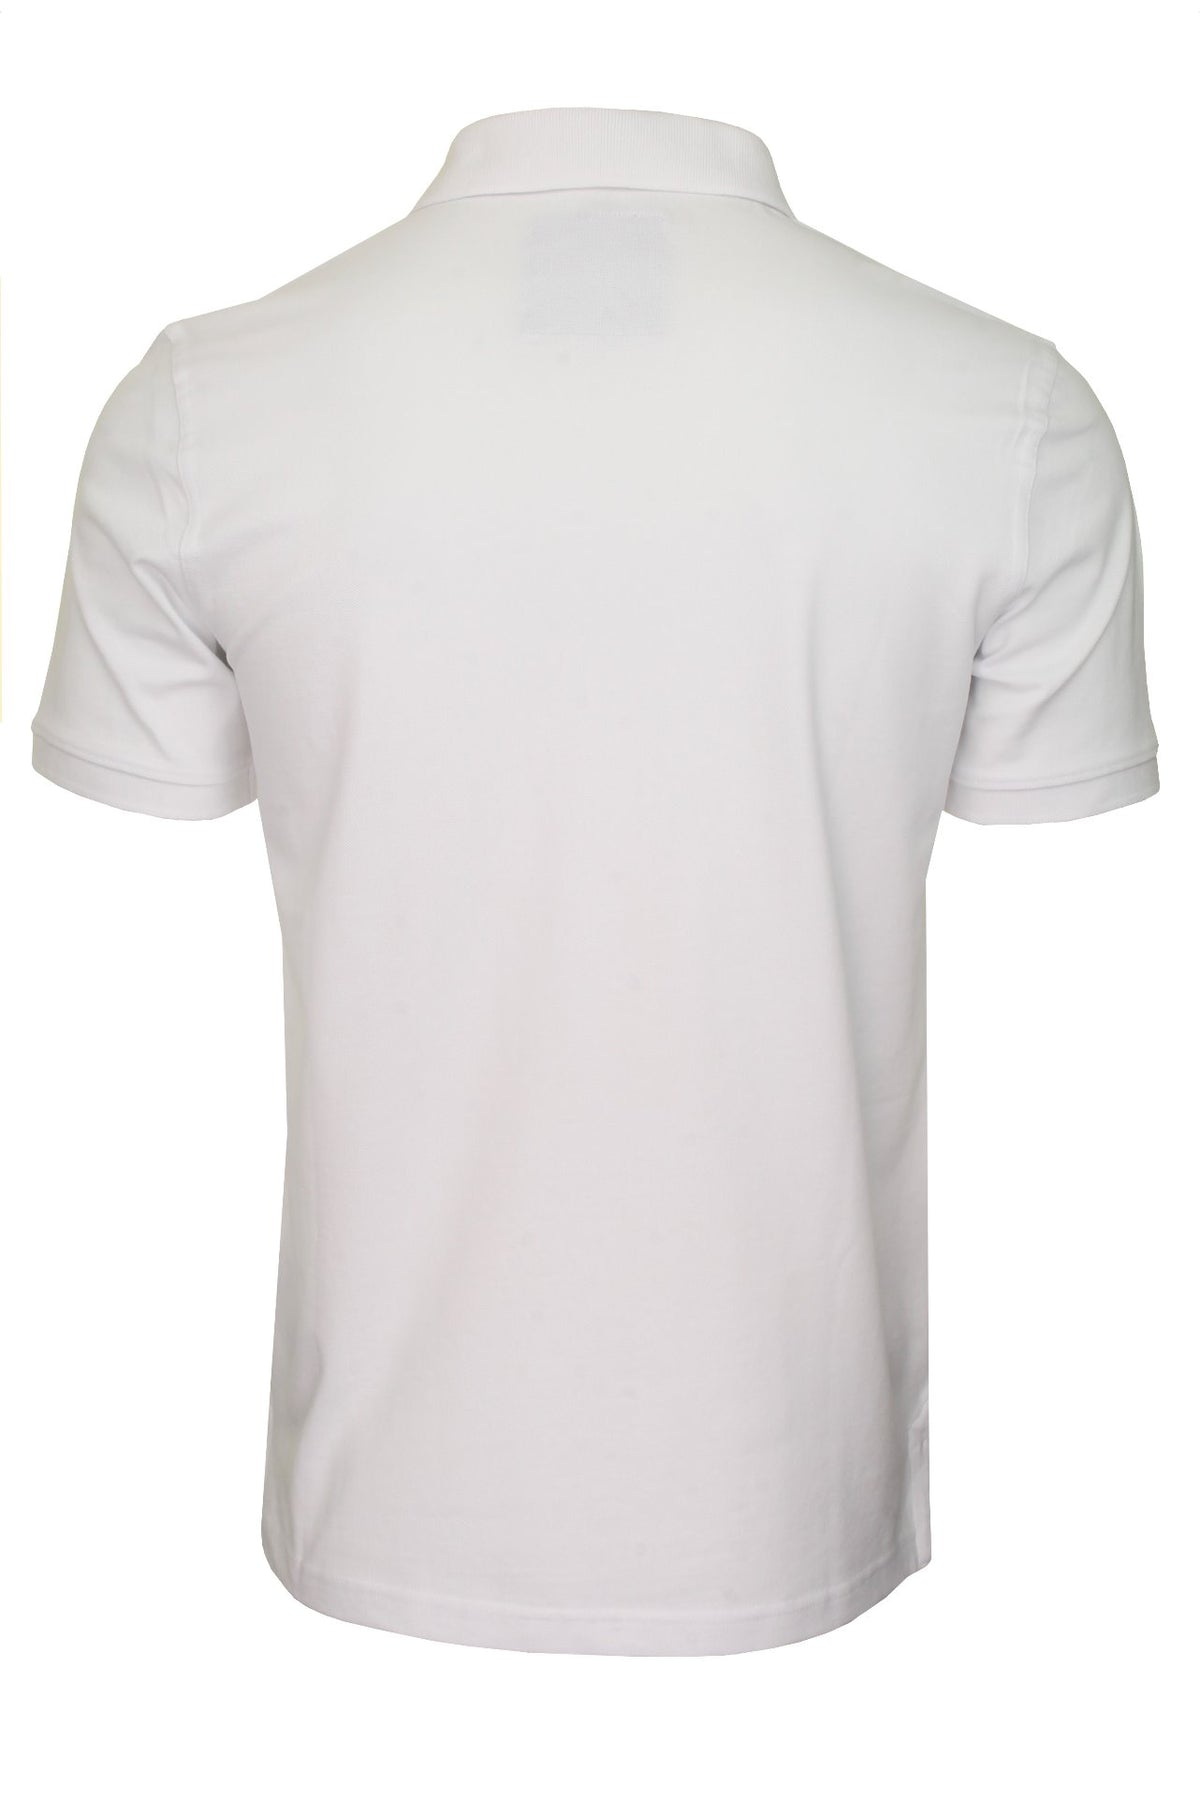 Crew Clothing Mens Pique Polo Shirt 'Classic Pique Polo' - Short Sleeved, 03, Mke002, Optic White